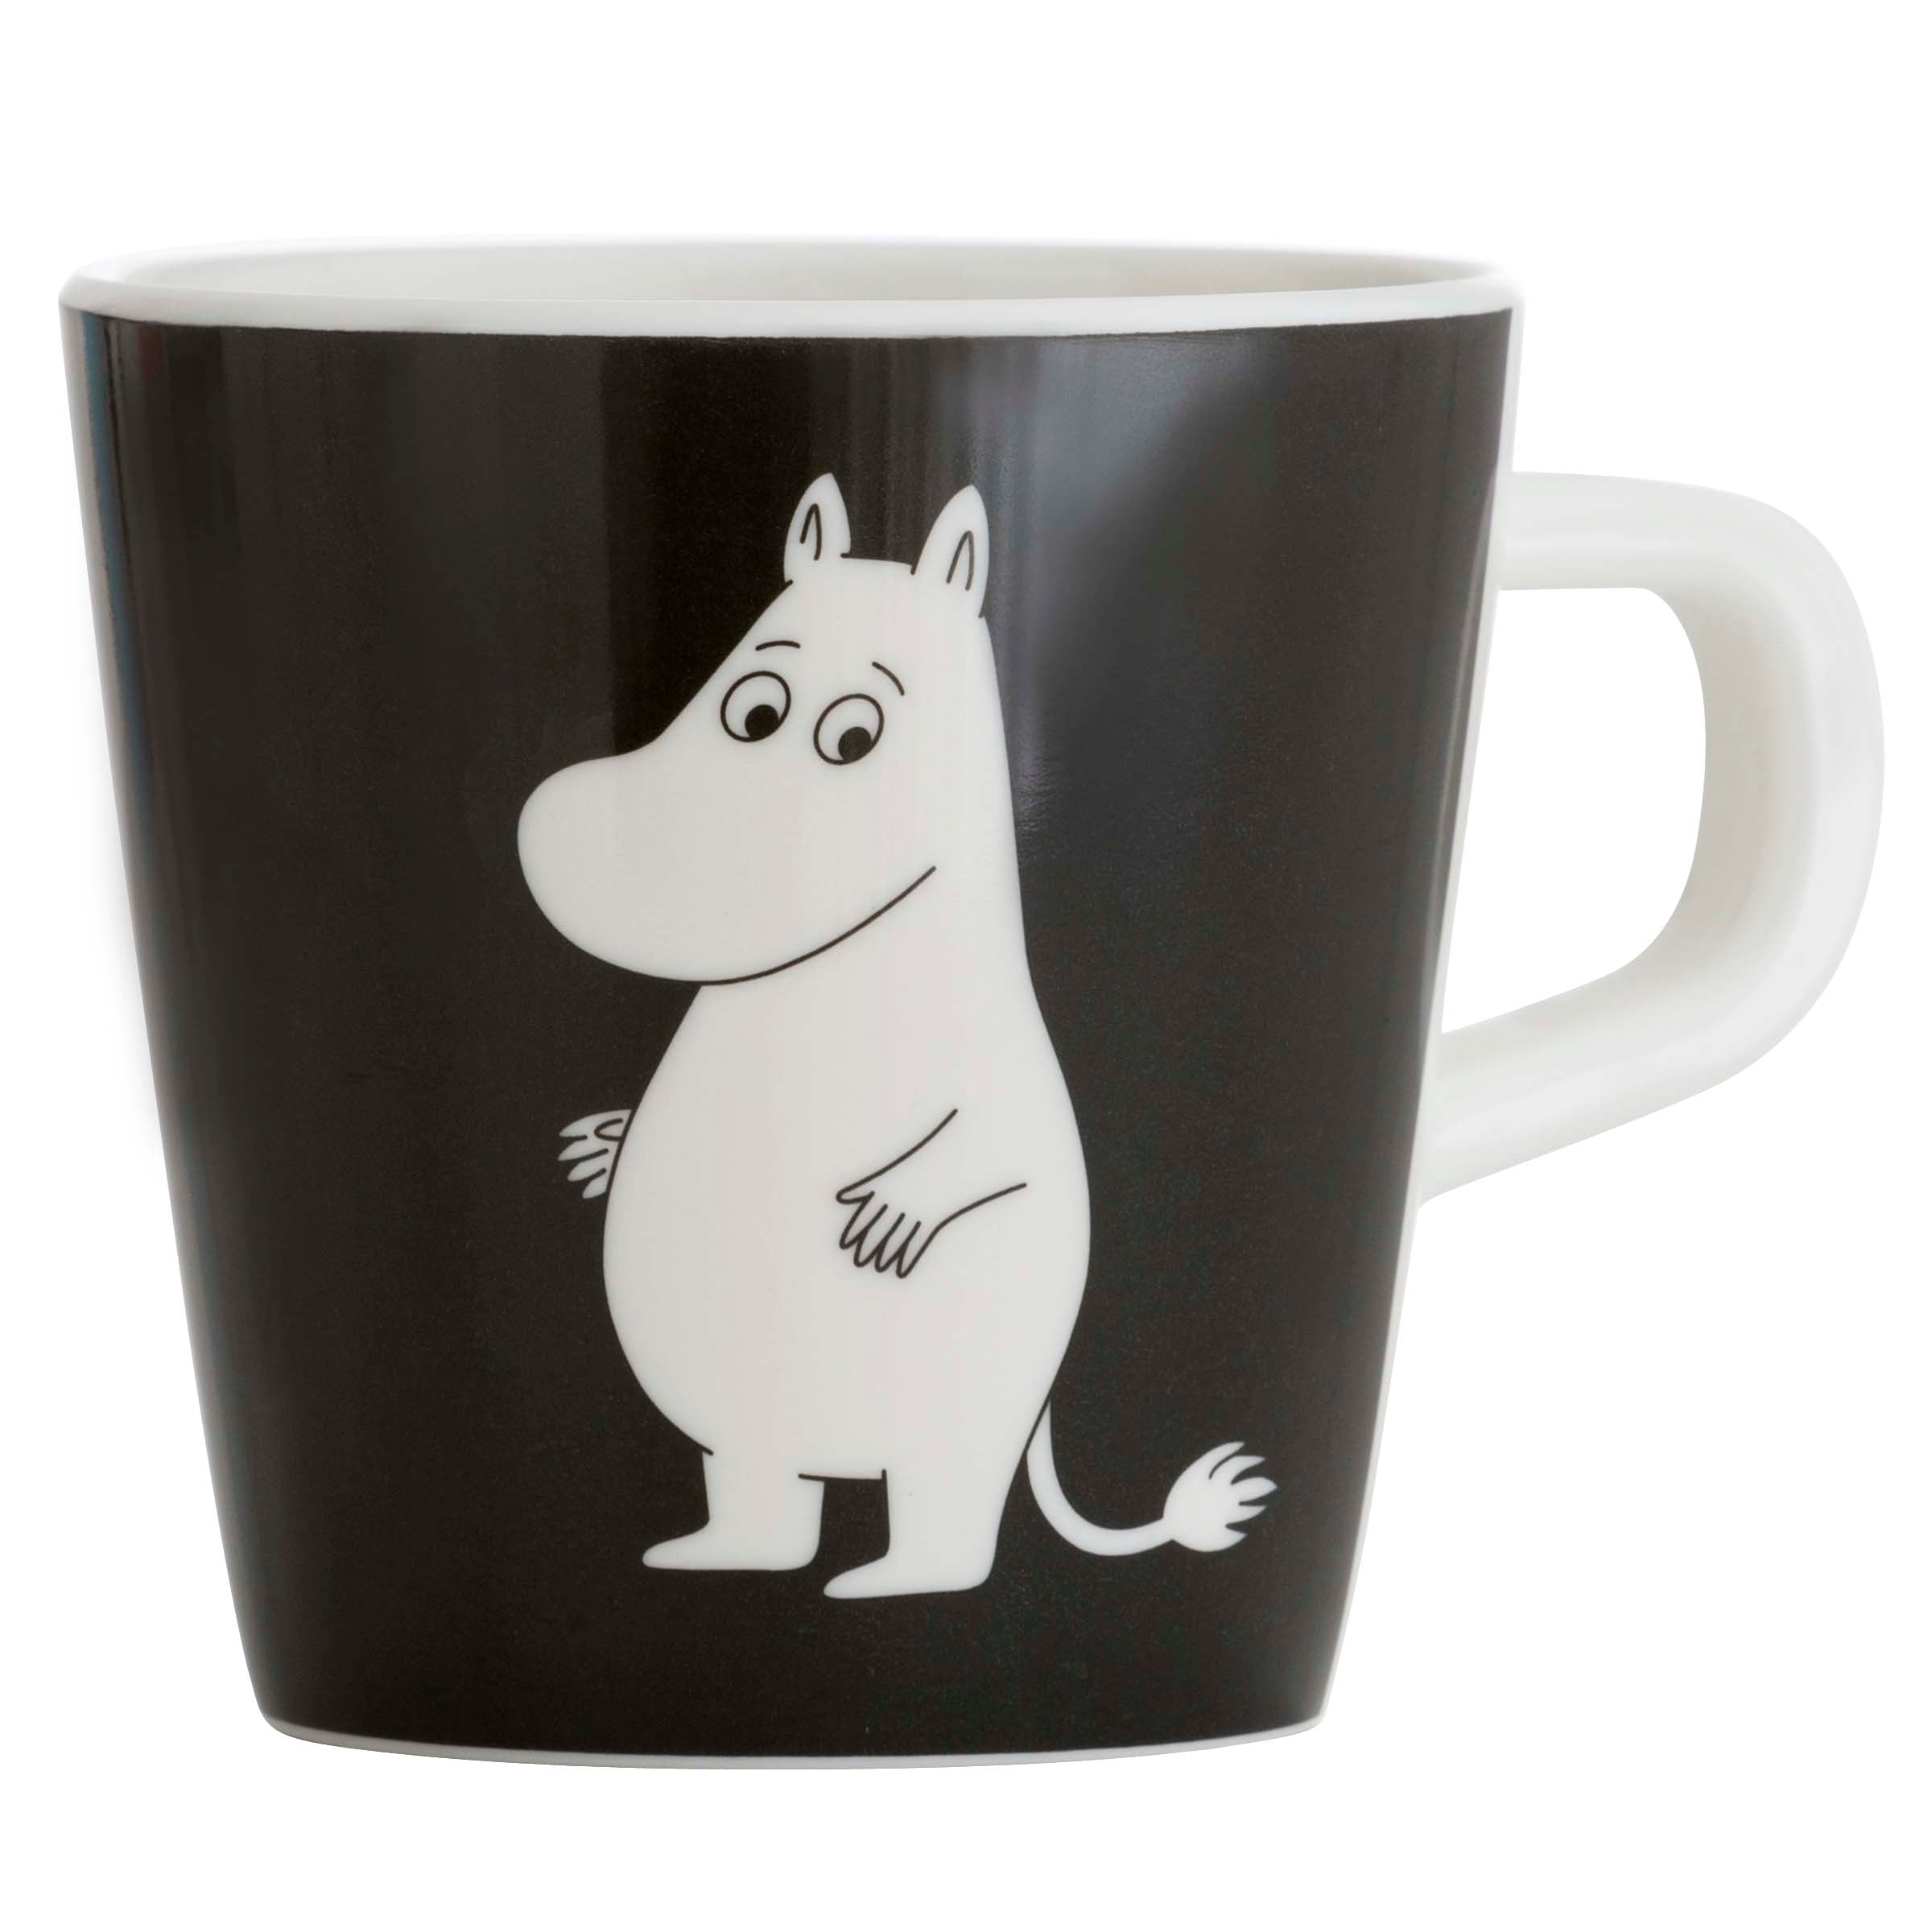 Moomin mug "Water & Bath", black